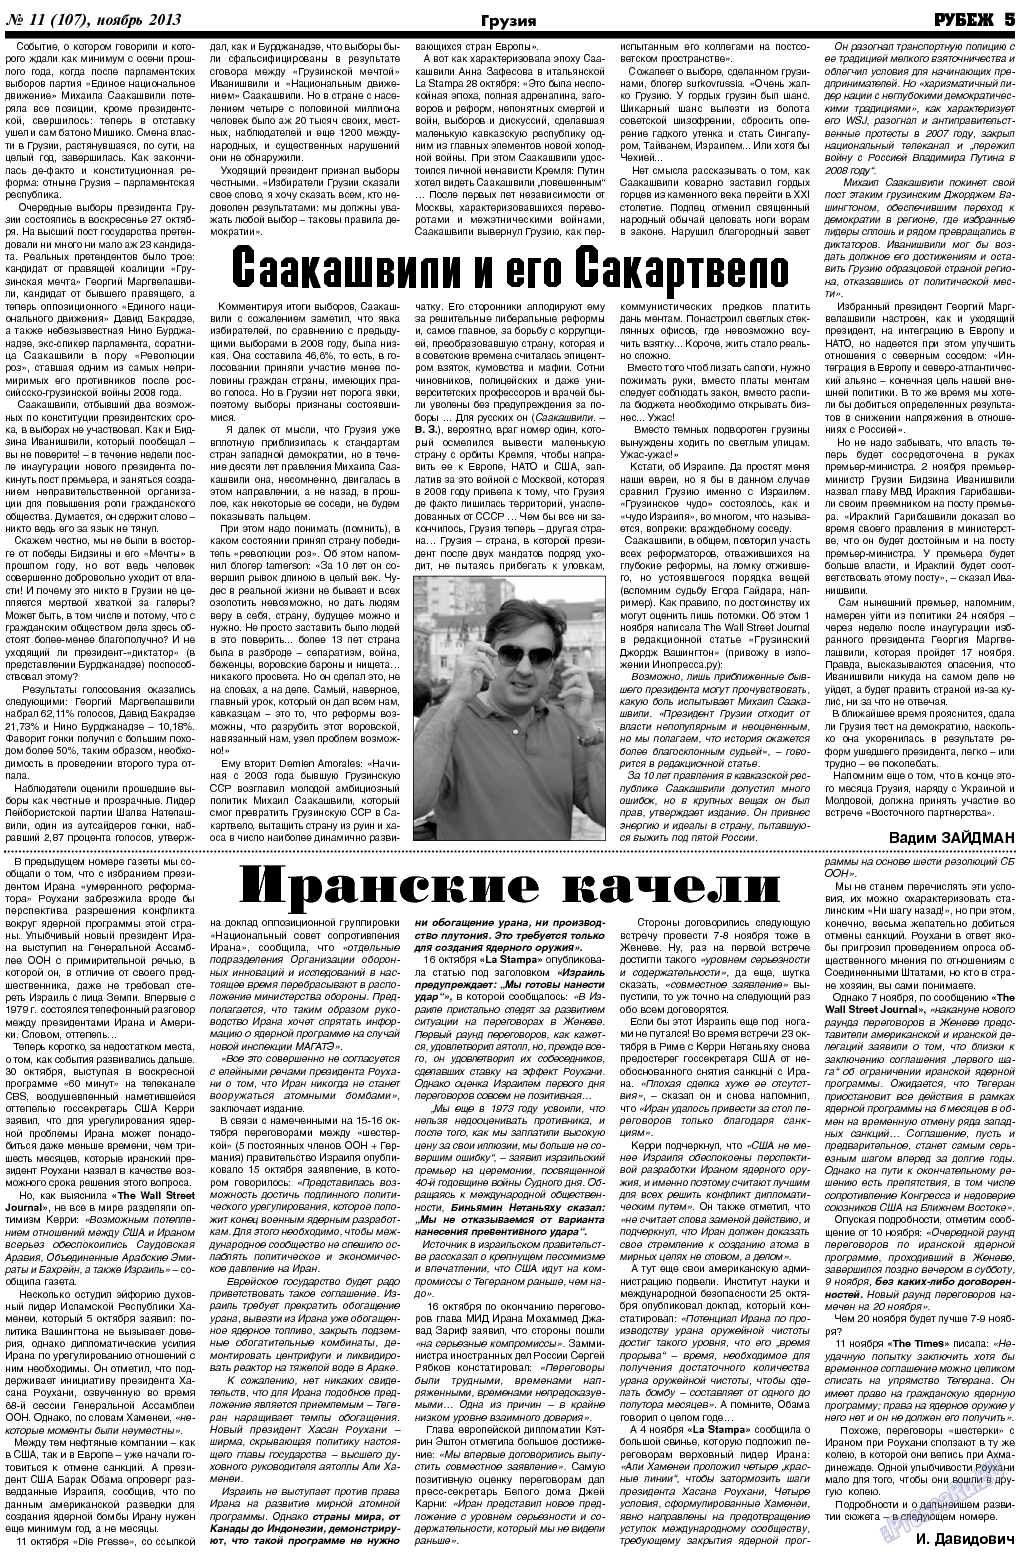 Рубеж, газета. 2013 №11 стр.5